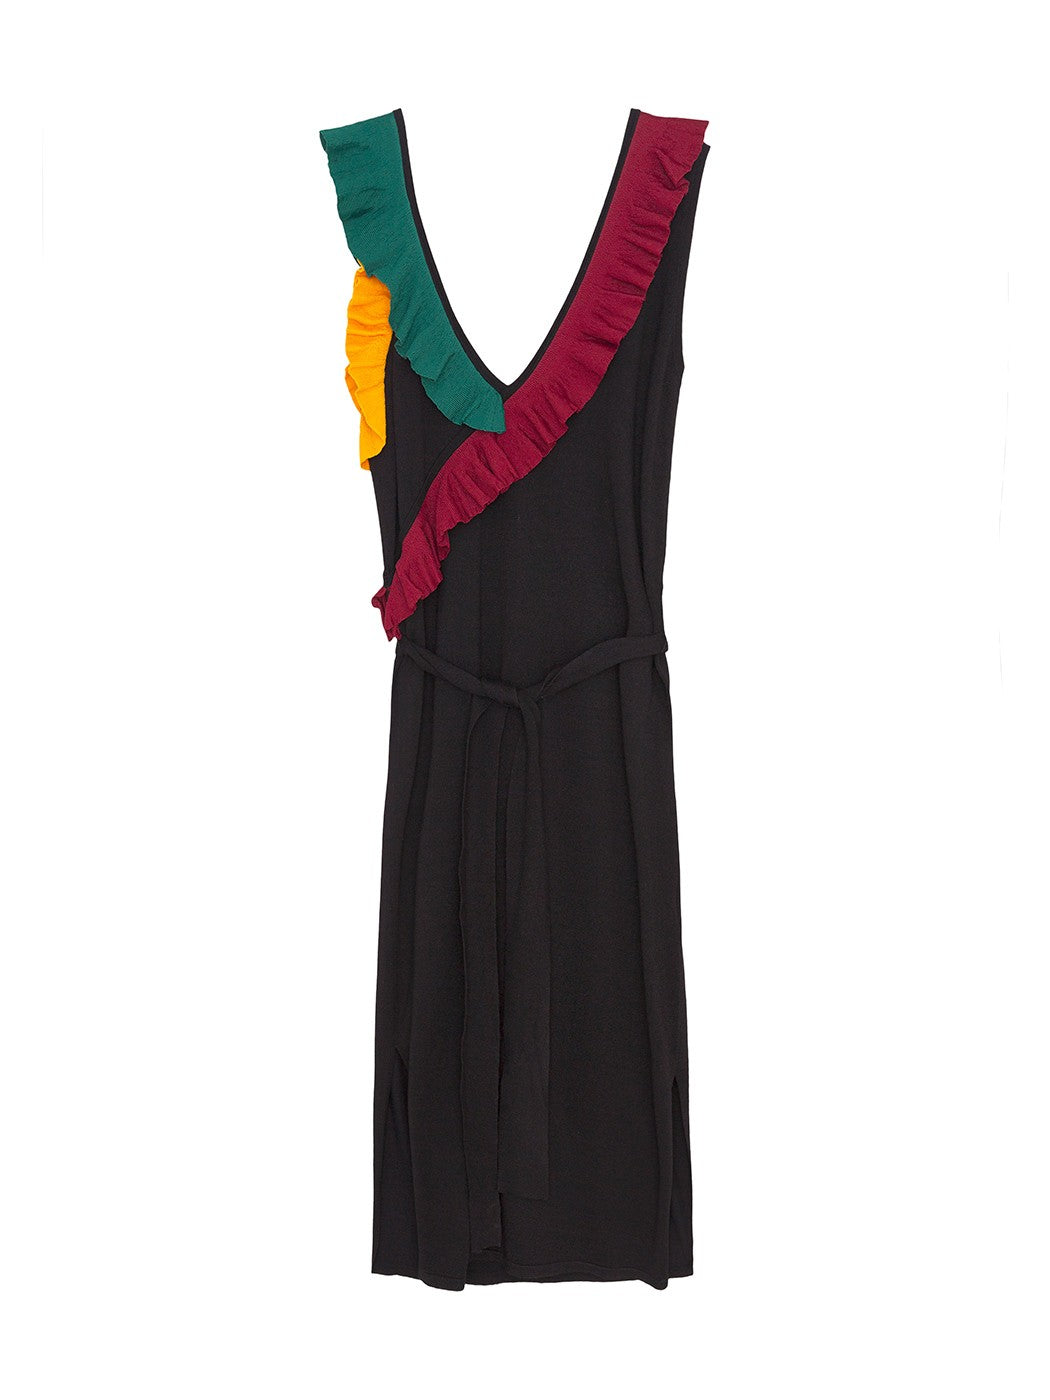 Contrasted ruffles dress απο INTROPIA - POSH MARKET